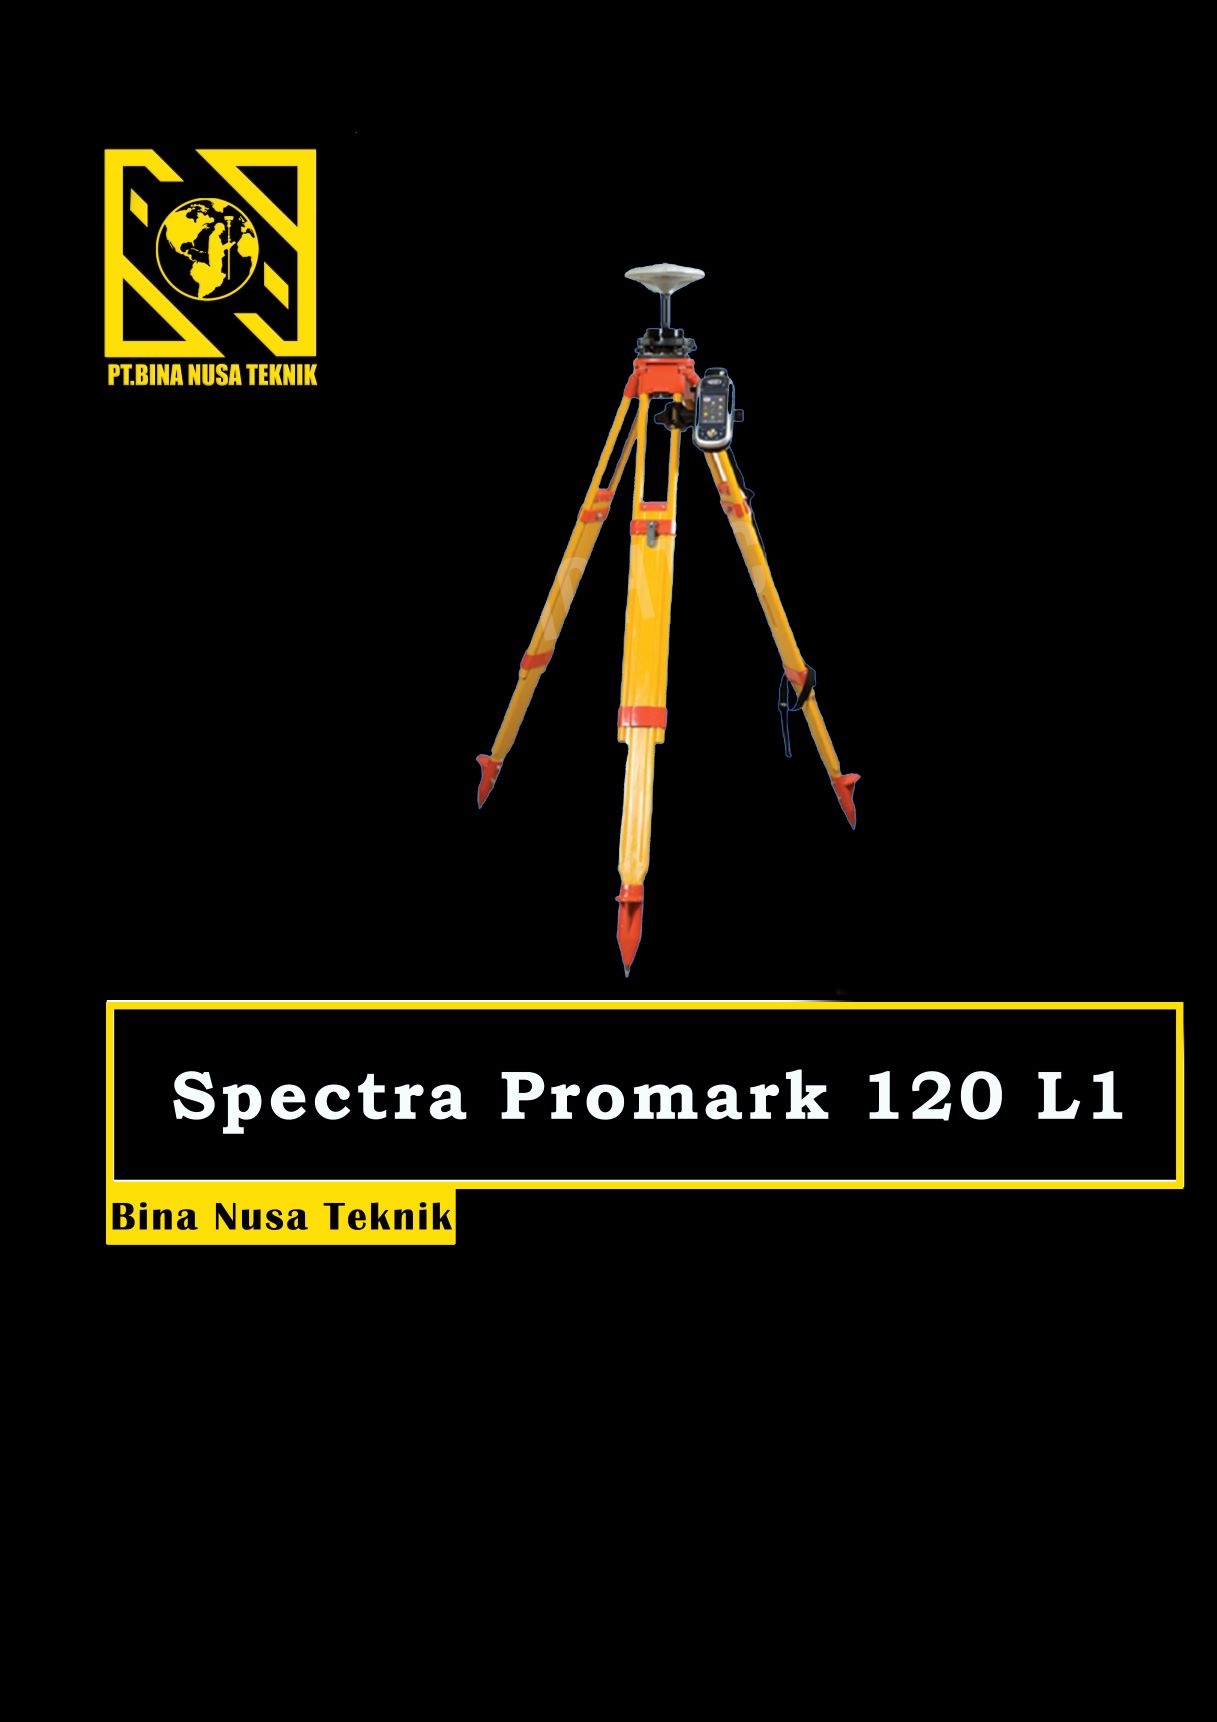 gps spectra Promark 120 L1